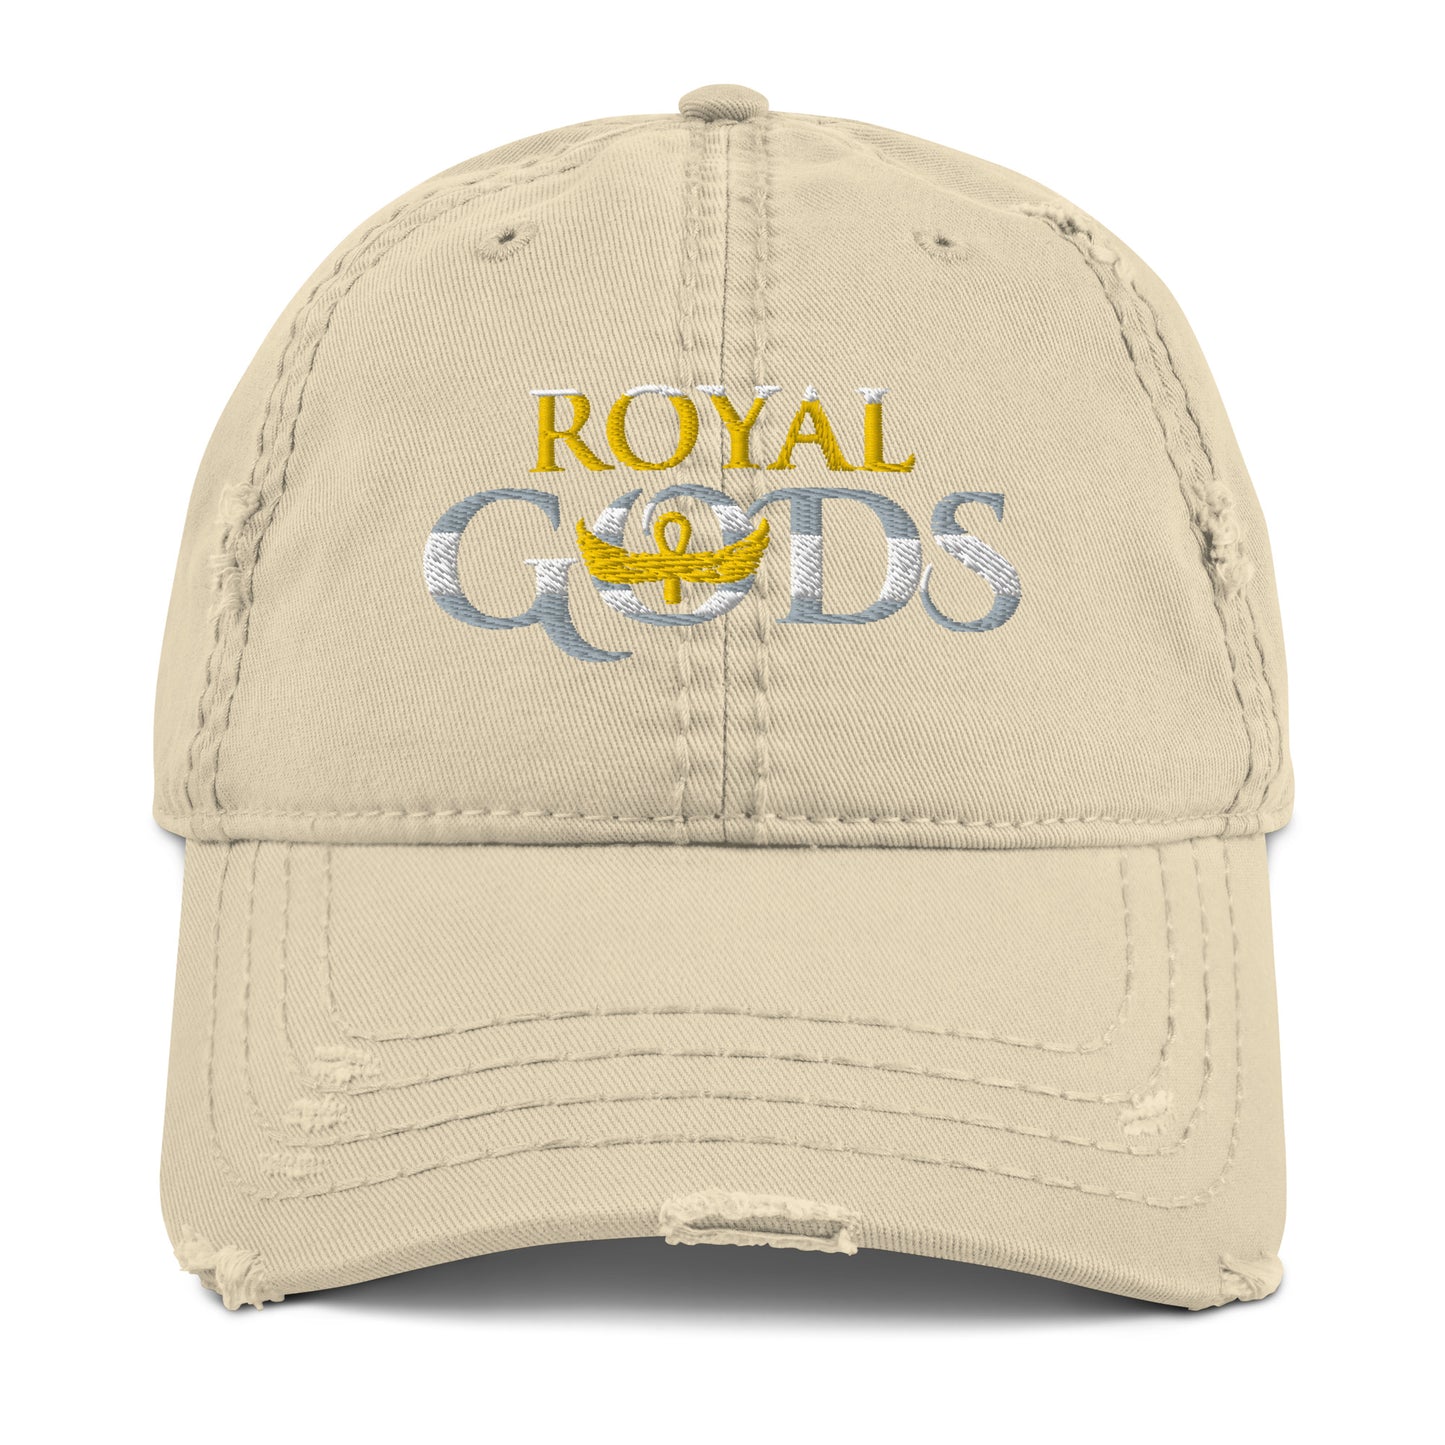 Royal Gods Dad Hat